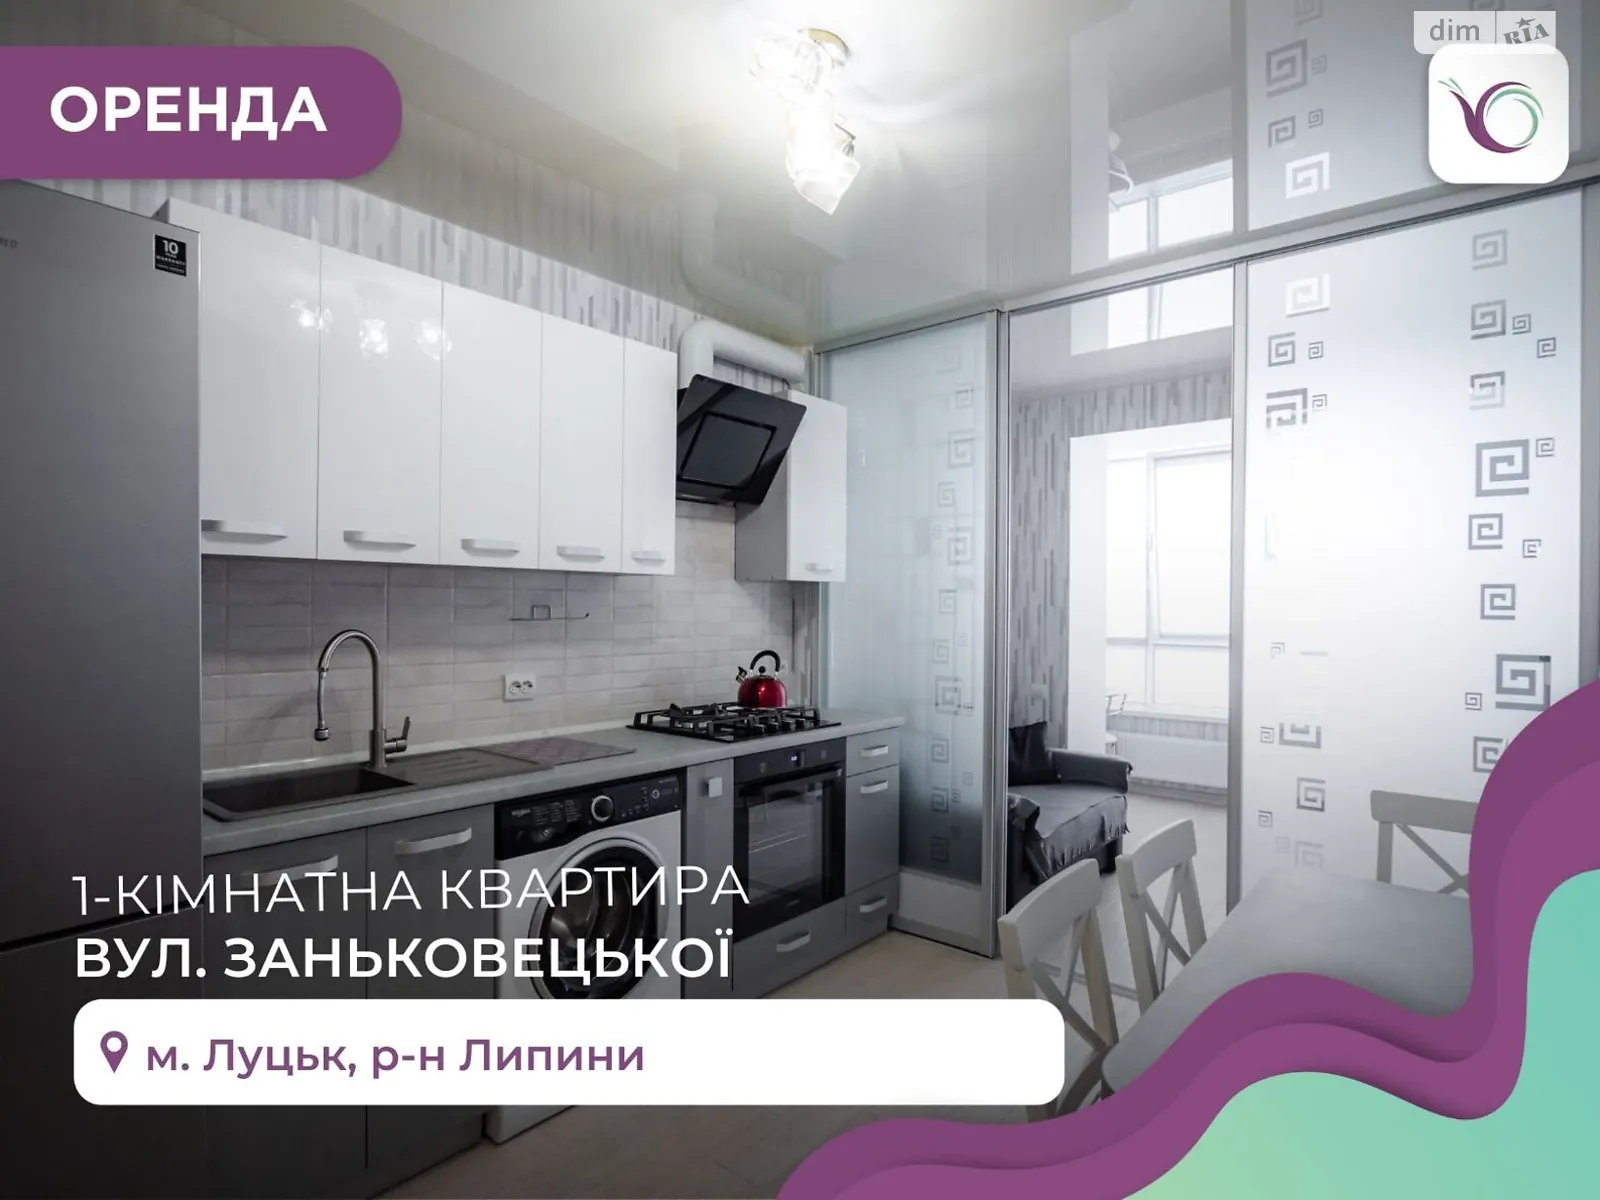 1-кімнатна квартира 66 кв. м у Луцьку, цена: 12000 грн